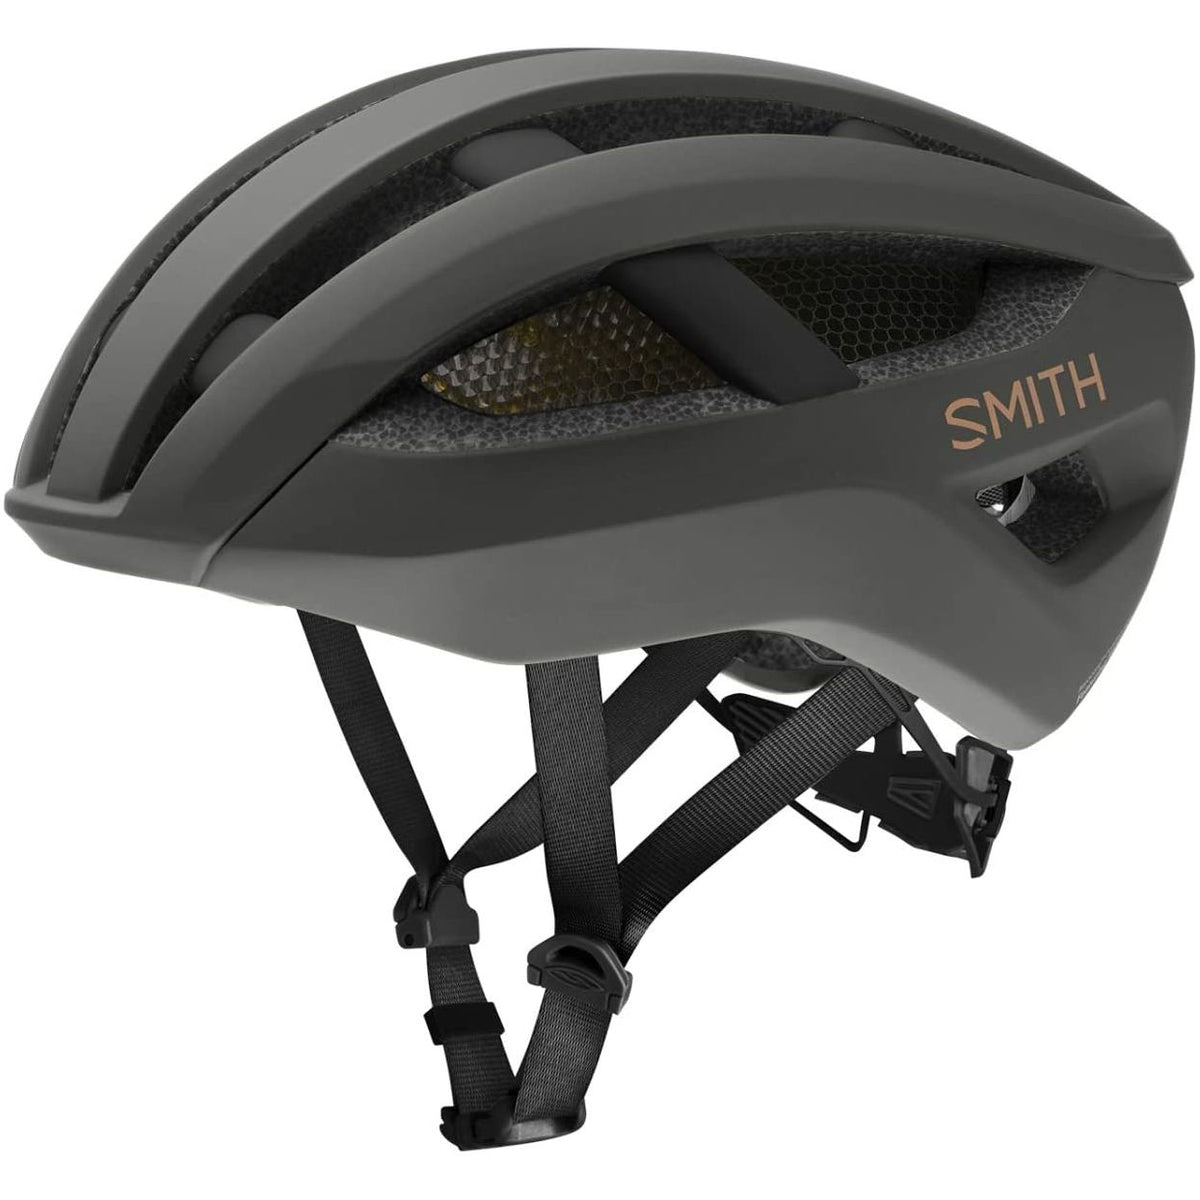 Smith Optics Network MIPS Helmet